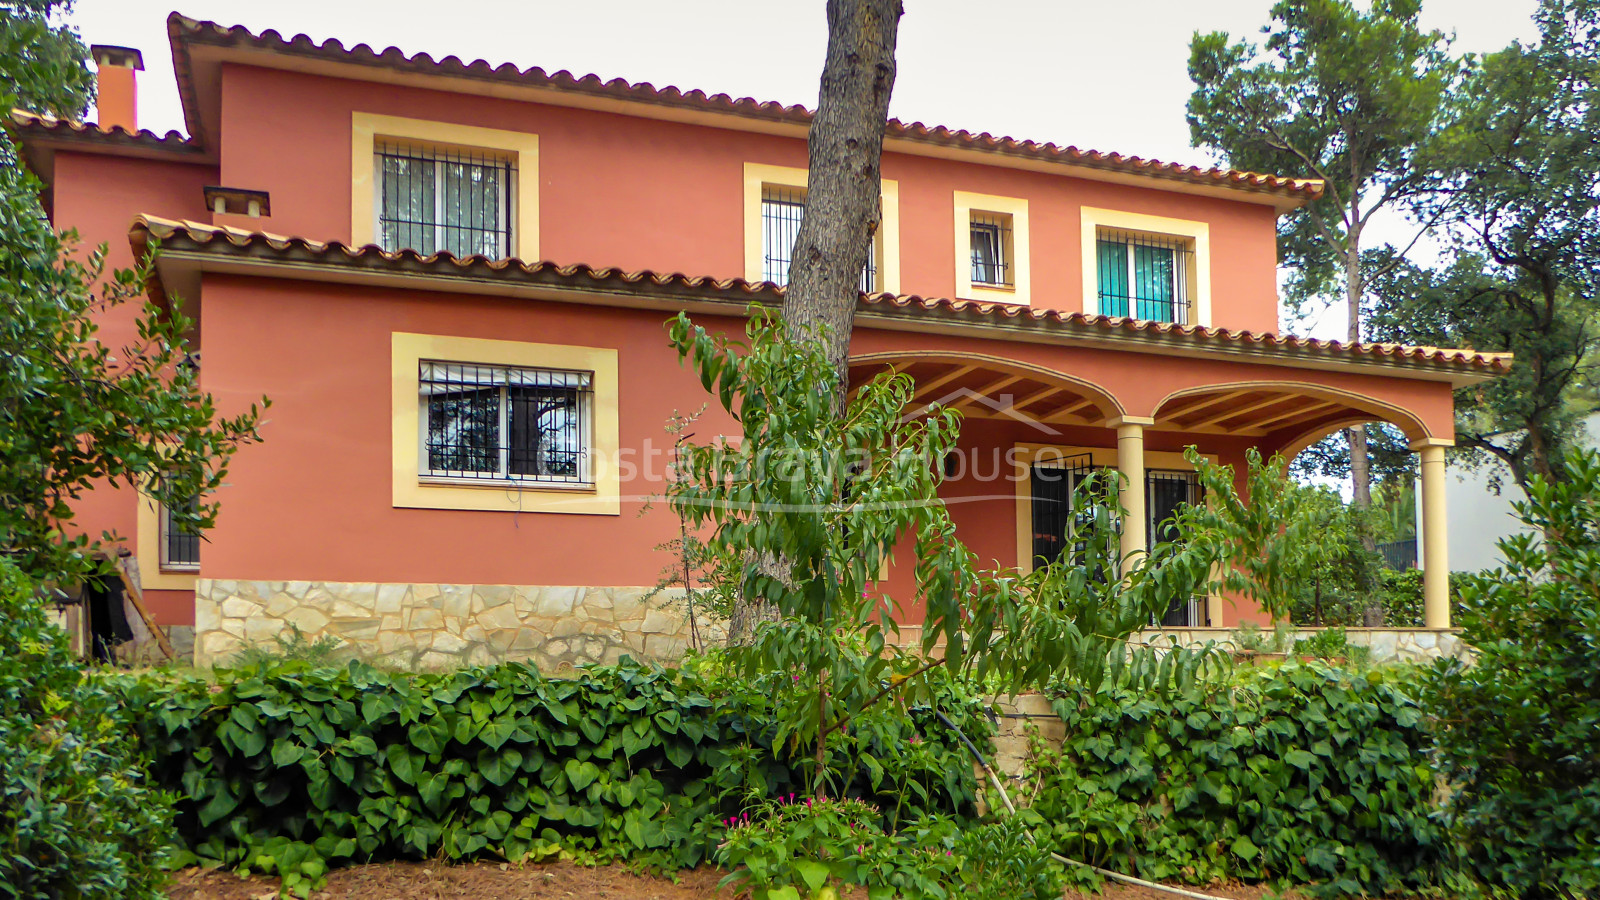 Mediterranean semi-rustic style house for sale in Tamariu